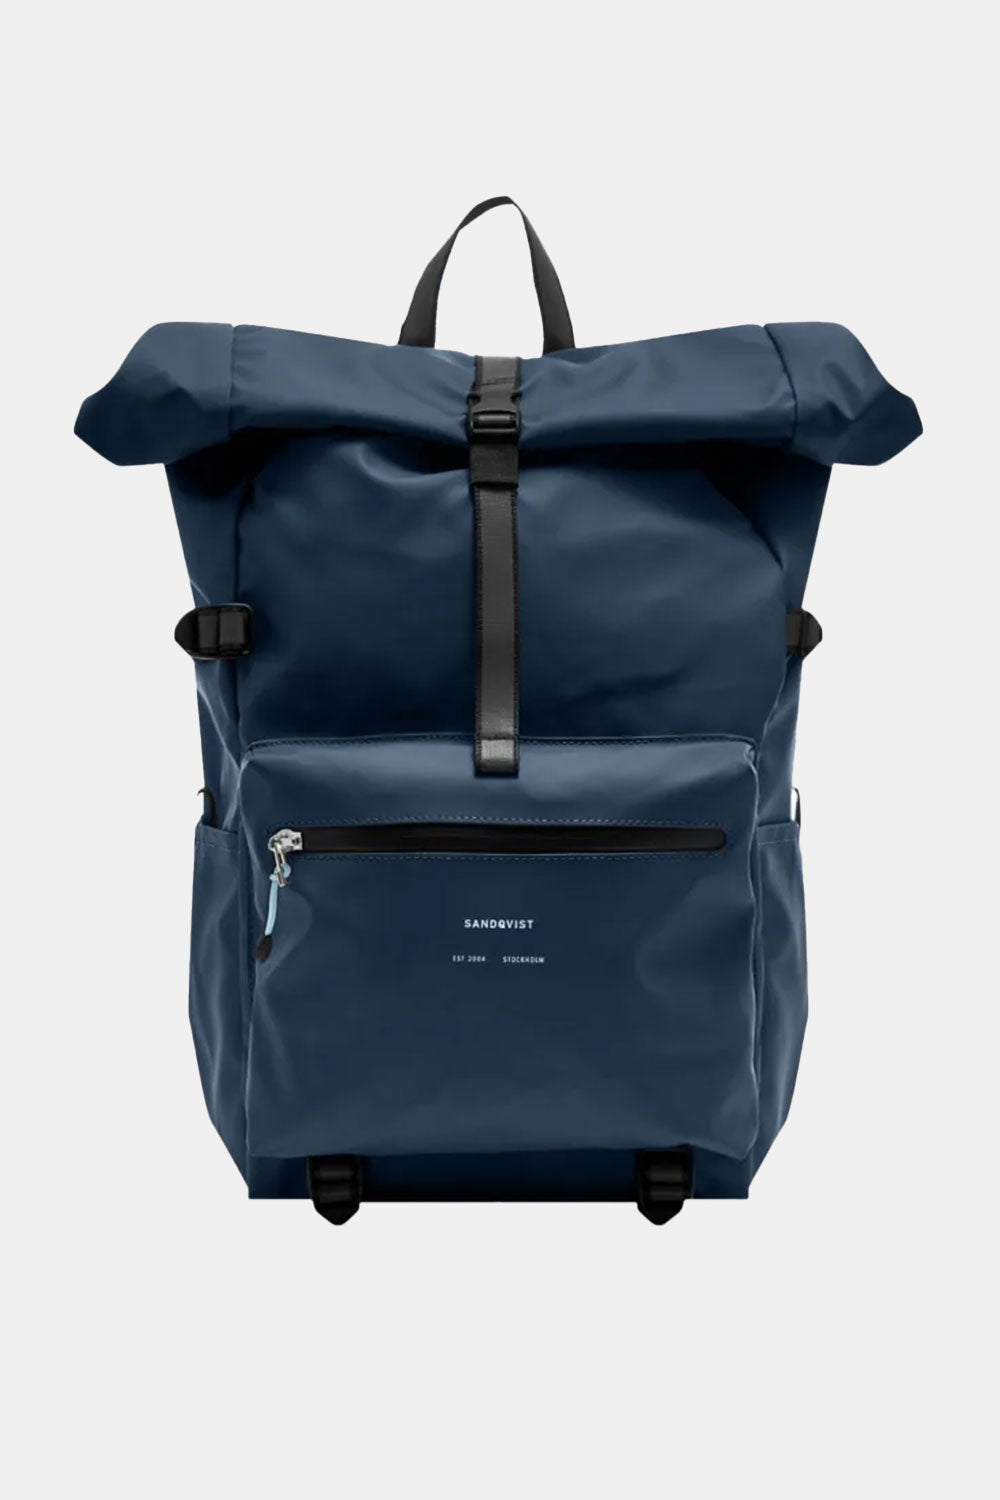 Sandqvist Ruben 2.0 Water-Resistant Rolltop Backpack (Evening Blue)